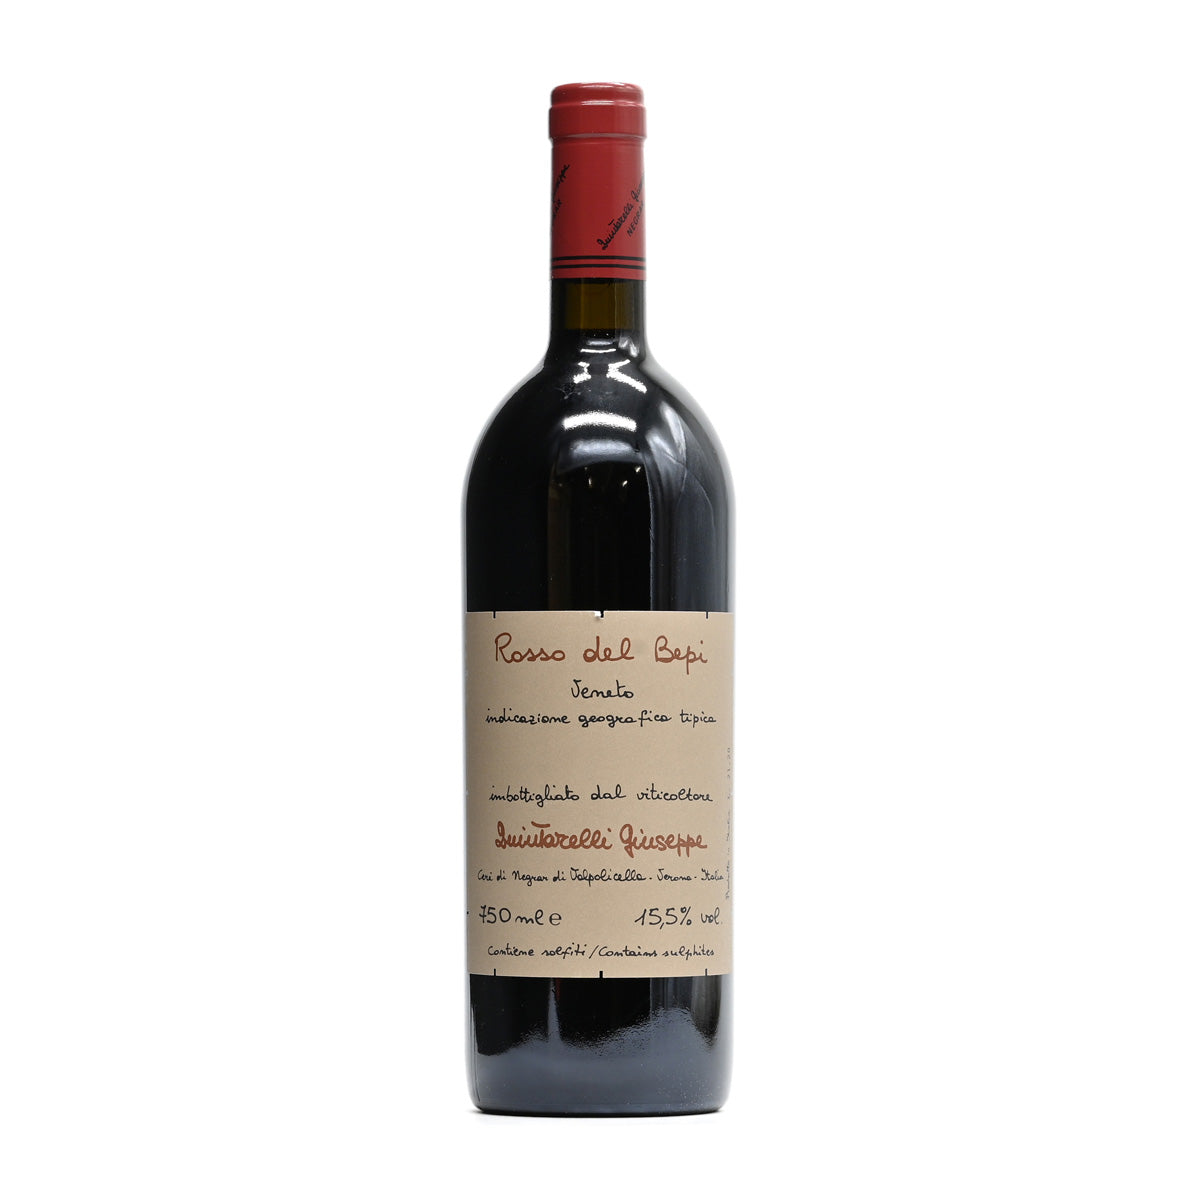 Quintarelli Rosso del Bepi 2014, 750ml Italian red wine, from Valpolicella, Veneto, Italy – GDV Fine Wines, Hong Kong